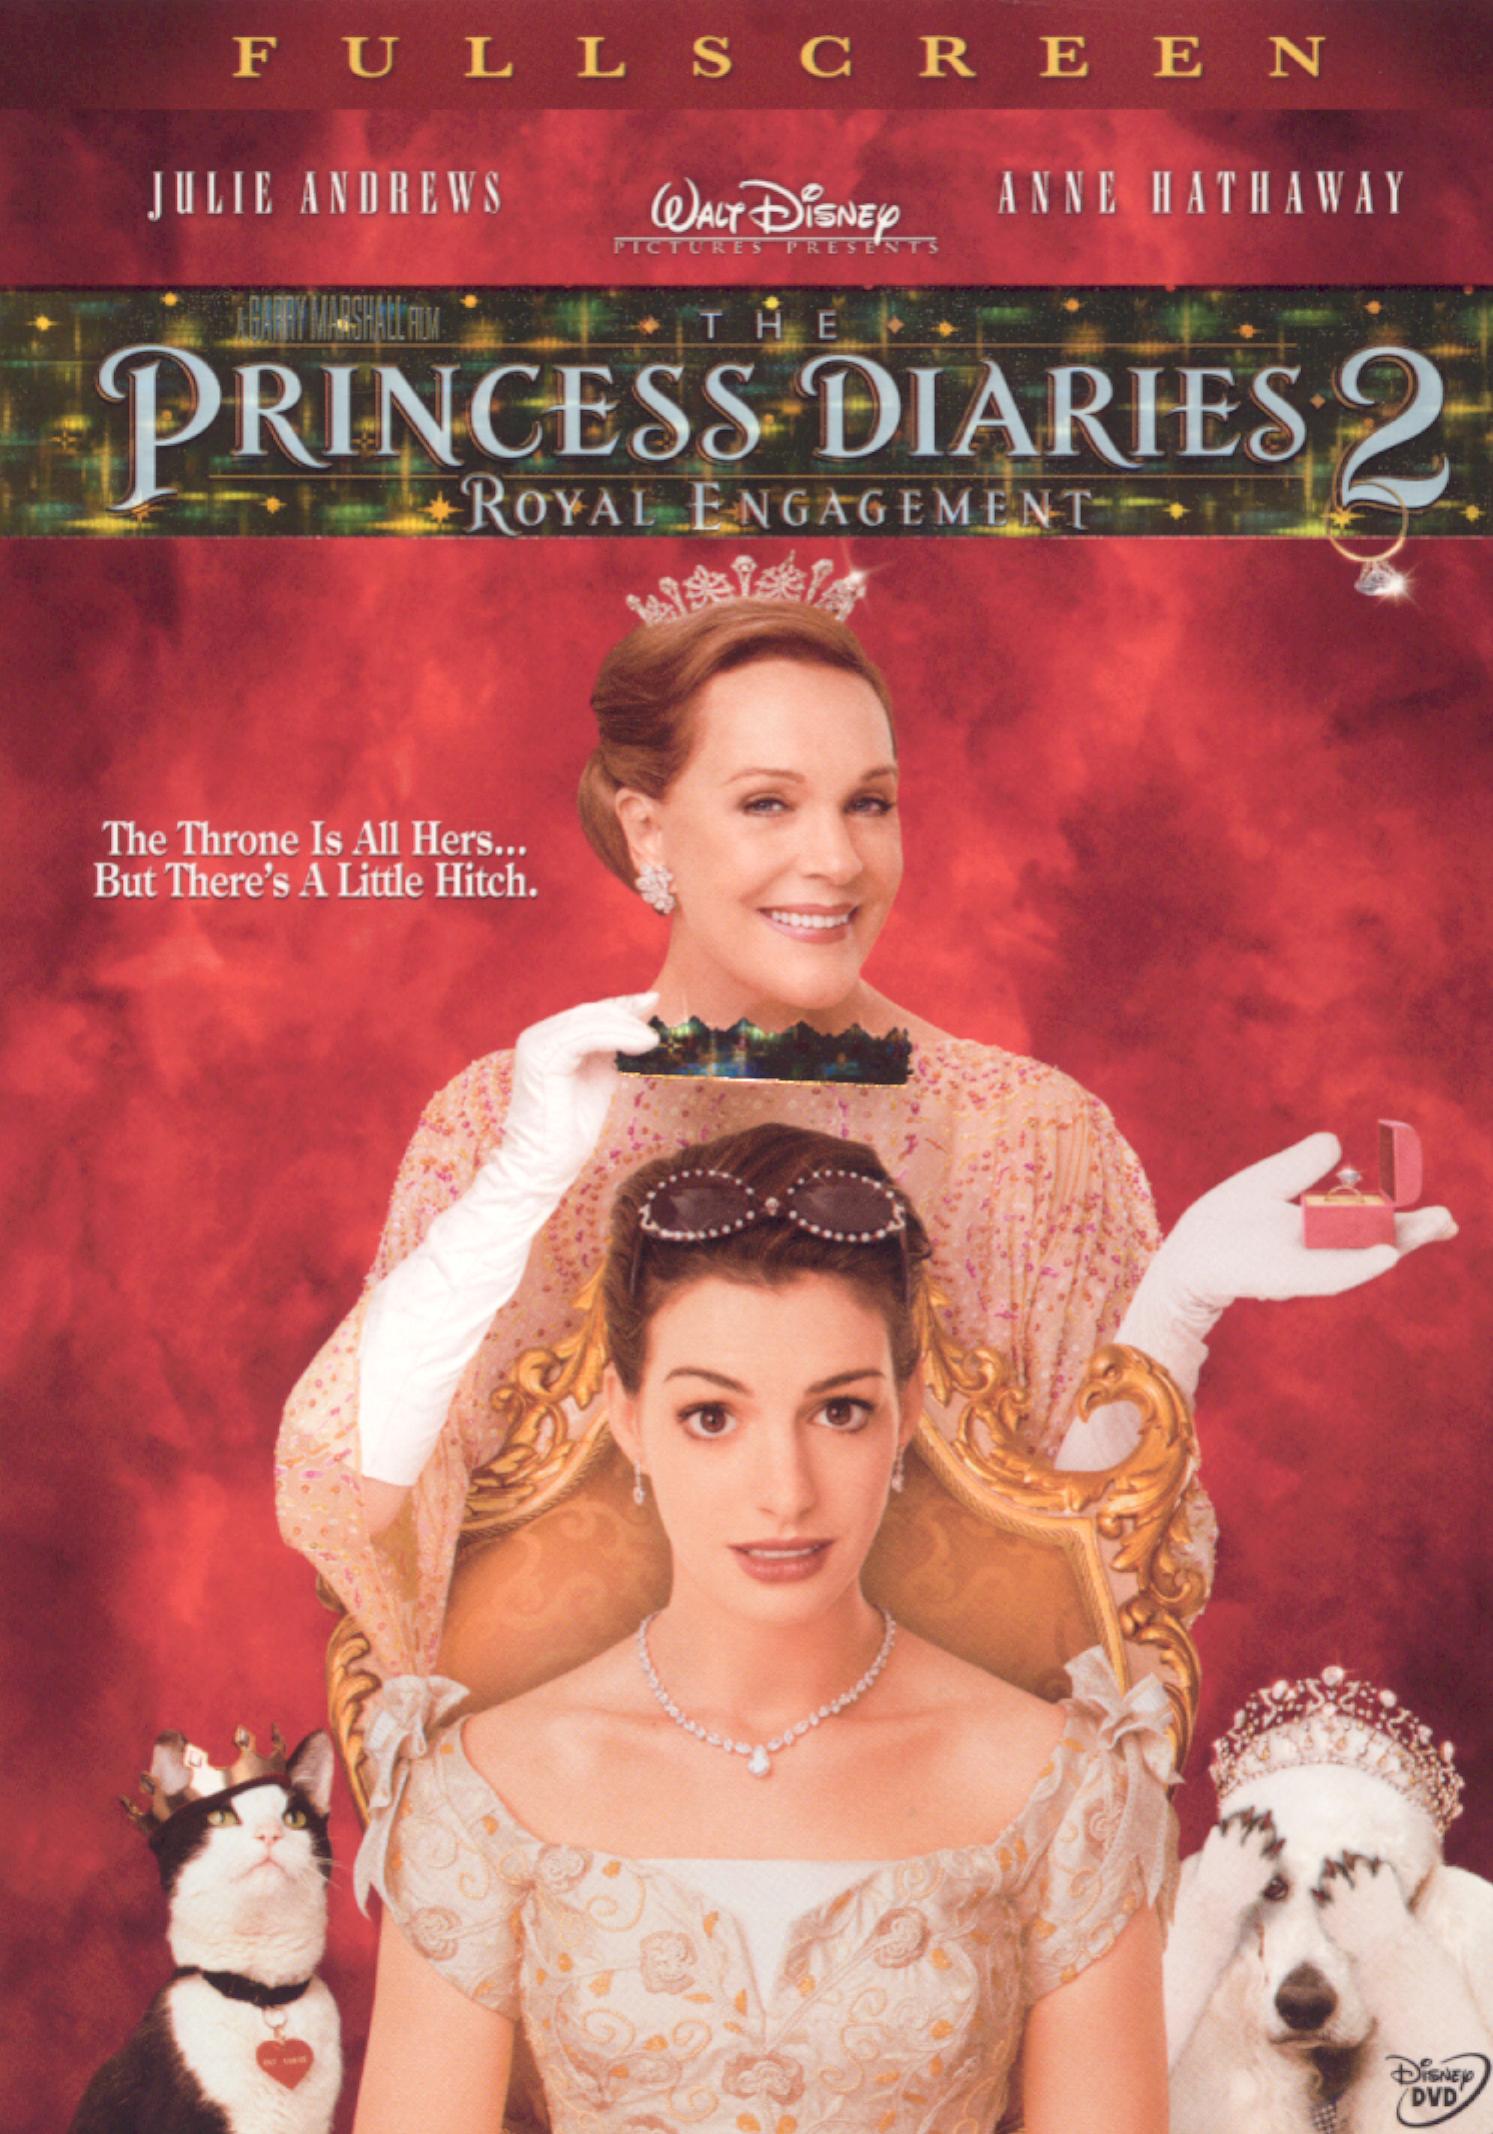 The Princess Diaries 2: Royal Engagement [P&S] [DVD] [2004] - Best Buy